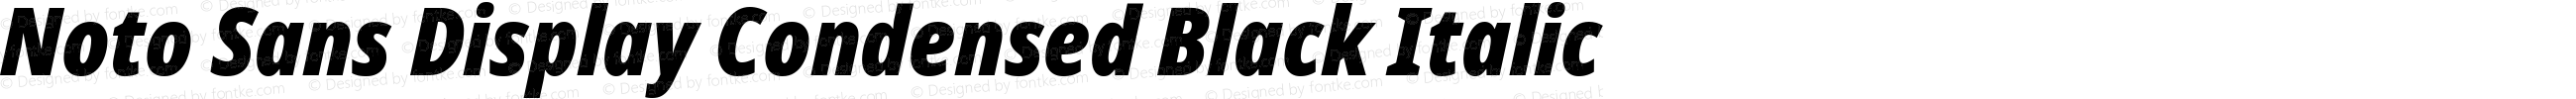 Noto Sans Display Condensed Black Italic